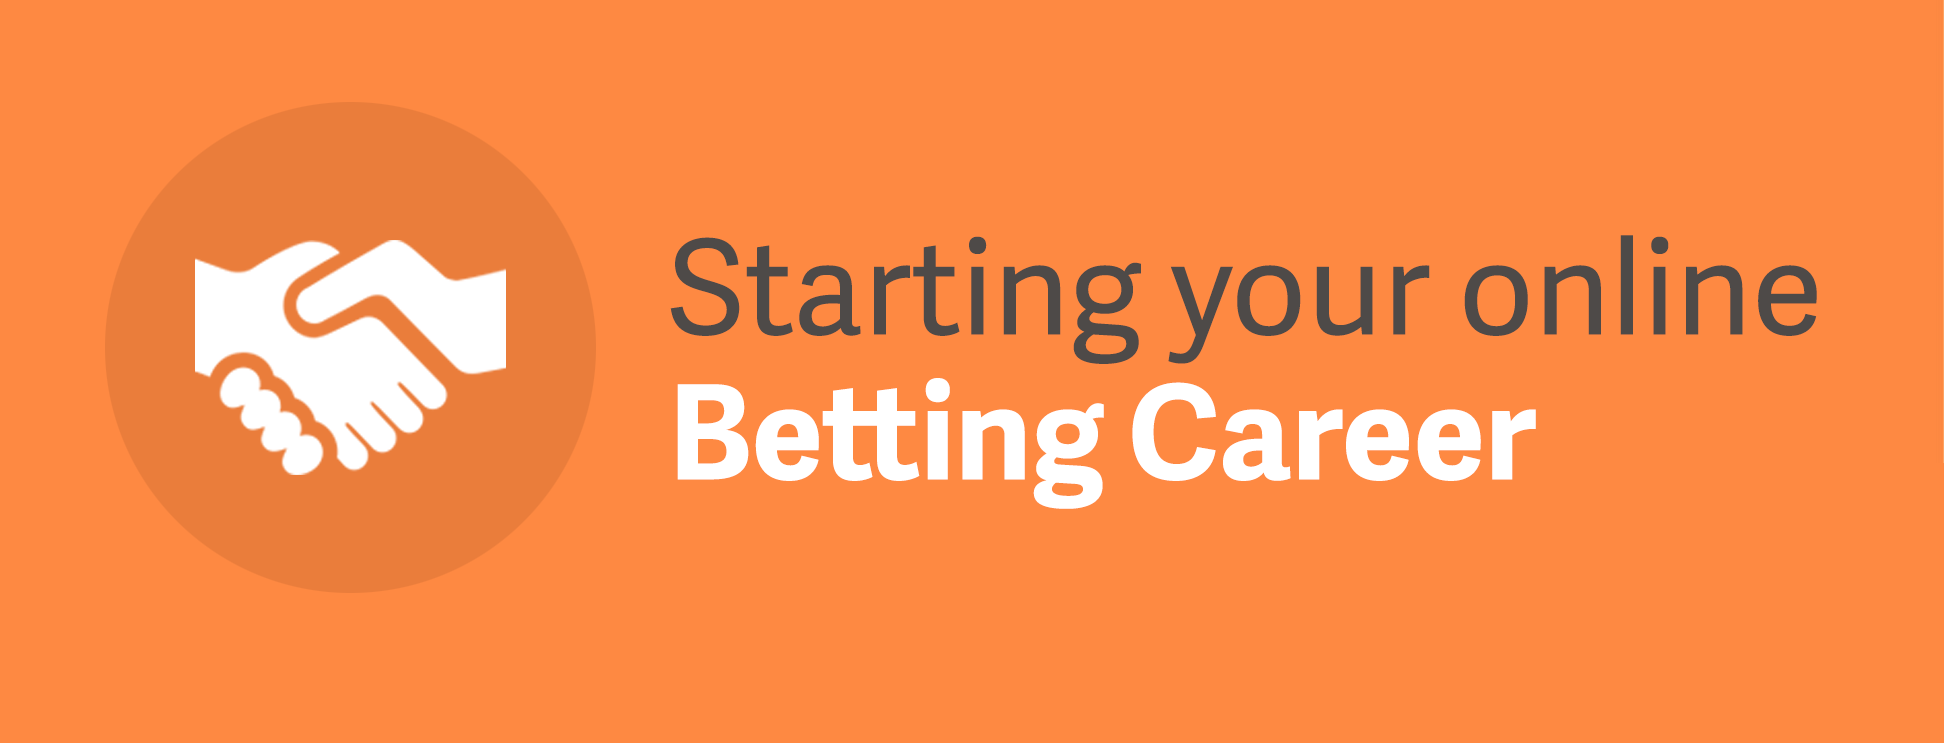 Start your online betting career